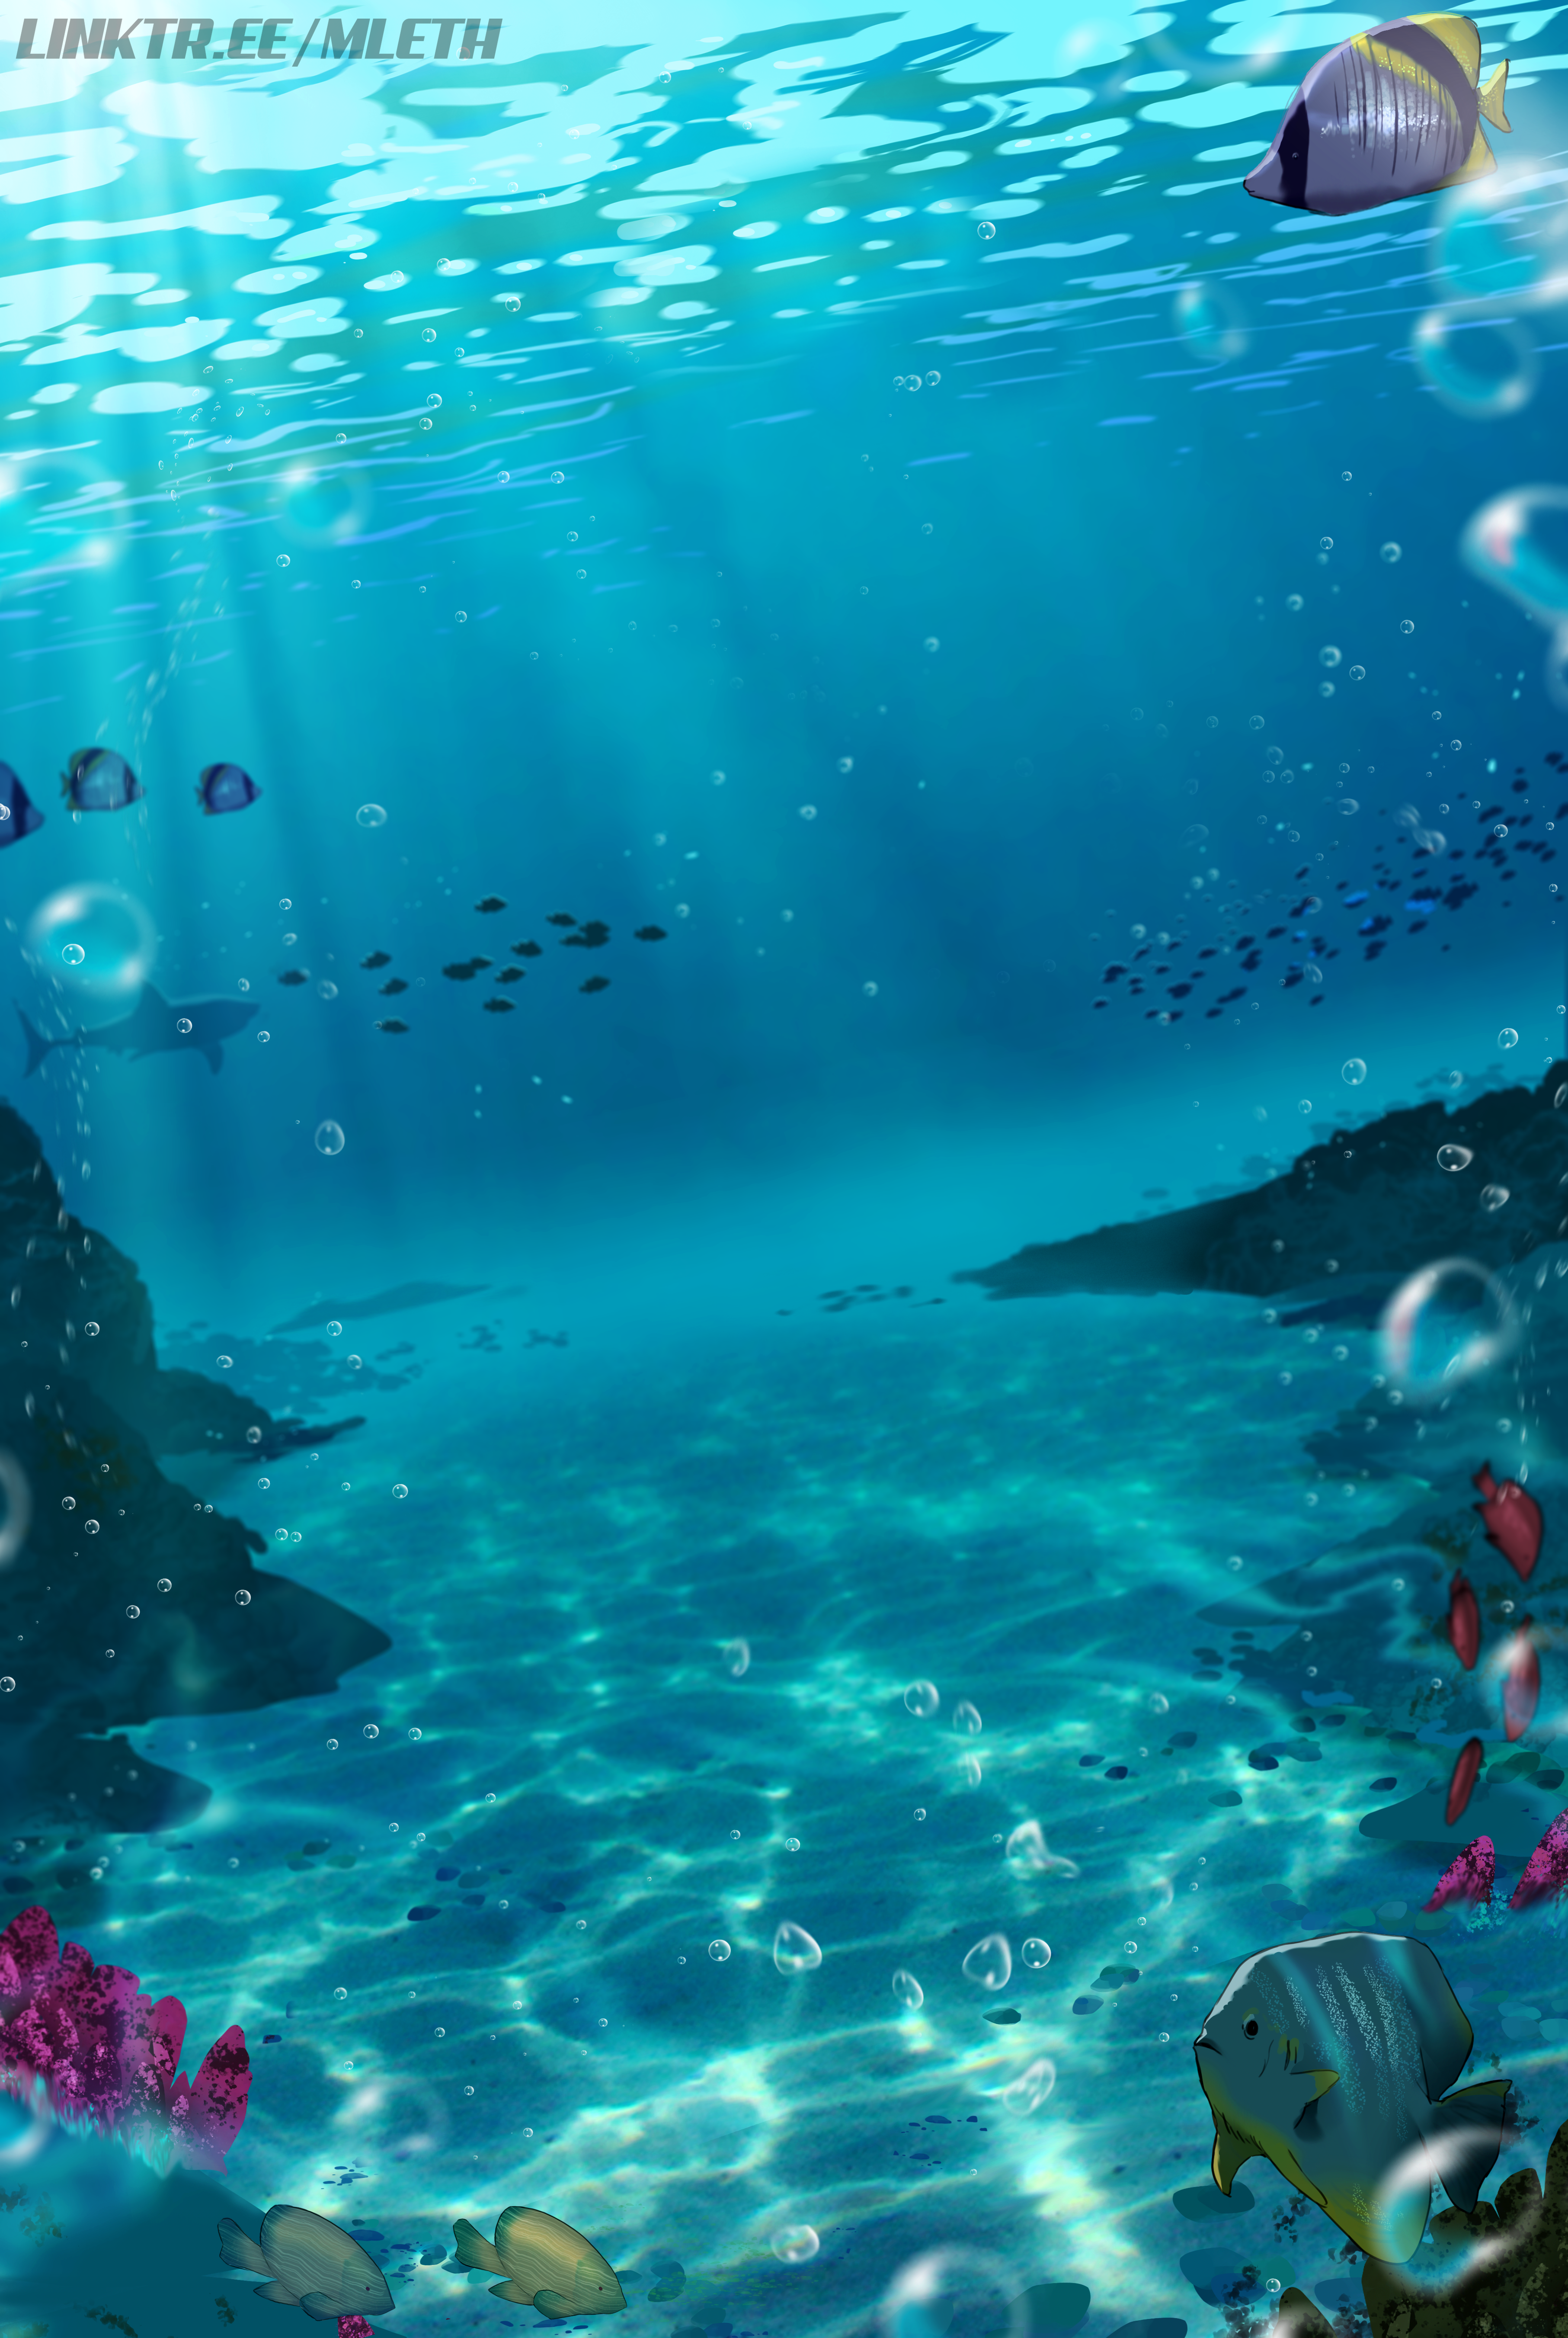 MLeth Depth Of Field Underwater Digital Art Fish Animals Shark Bubbles Sea Life Coral Blurry Backgro 3626x5405